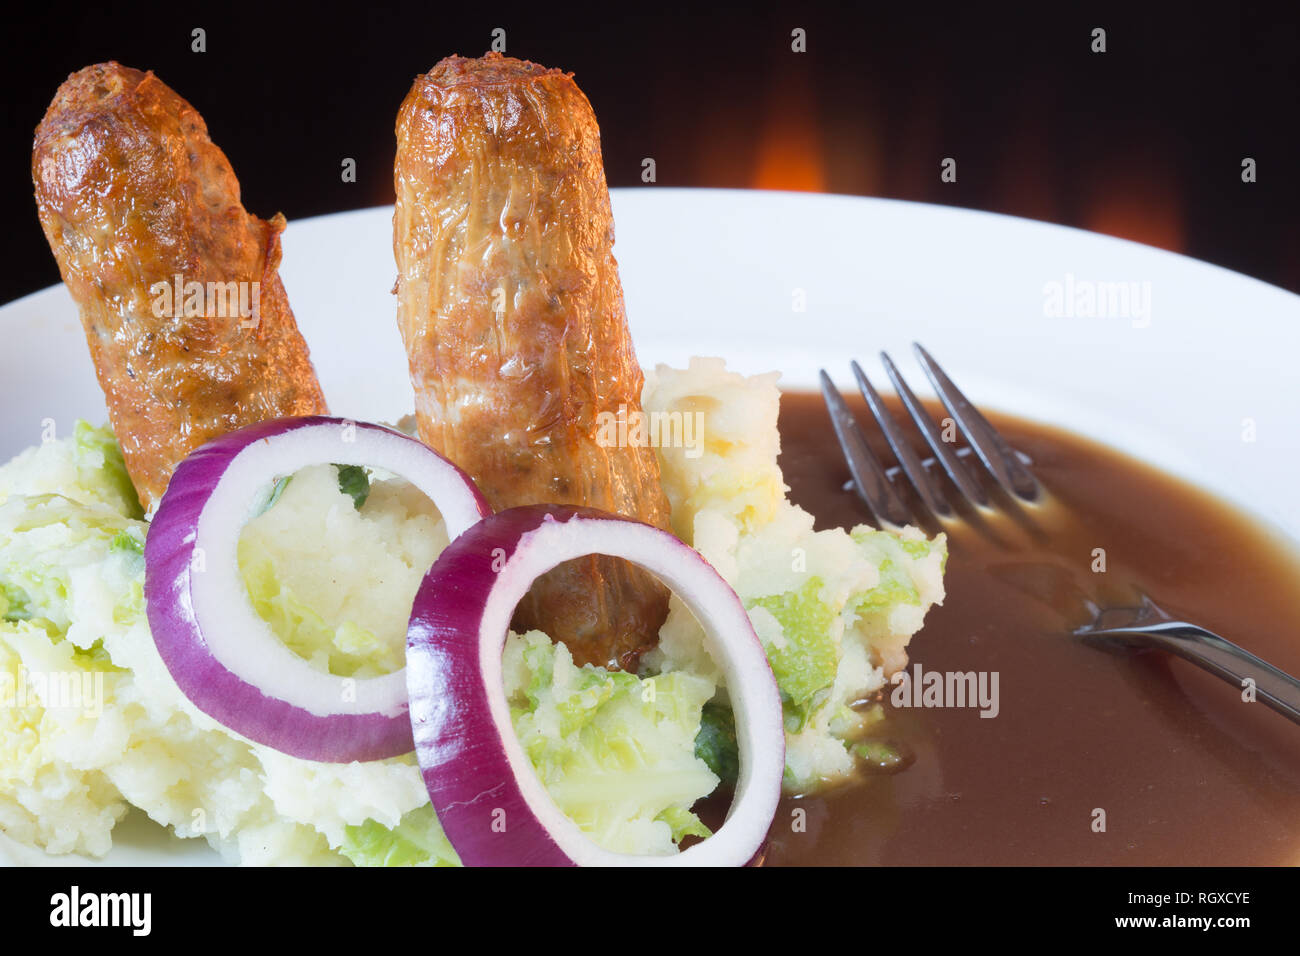 Classic English pub dish of Sausage and mash with gravy sauce. Stock Photo